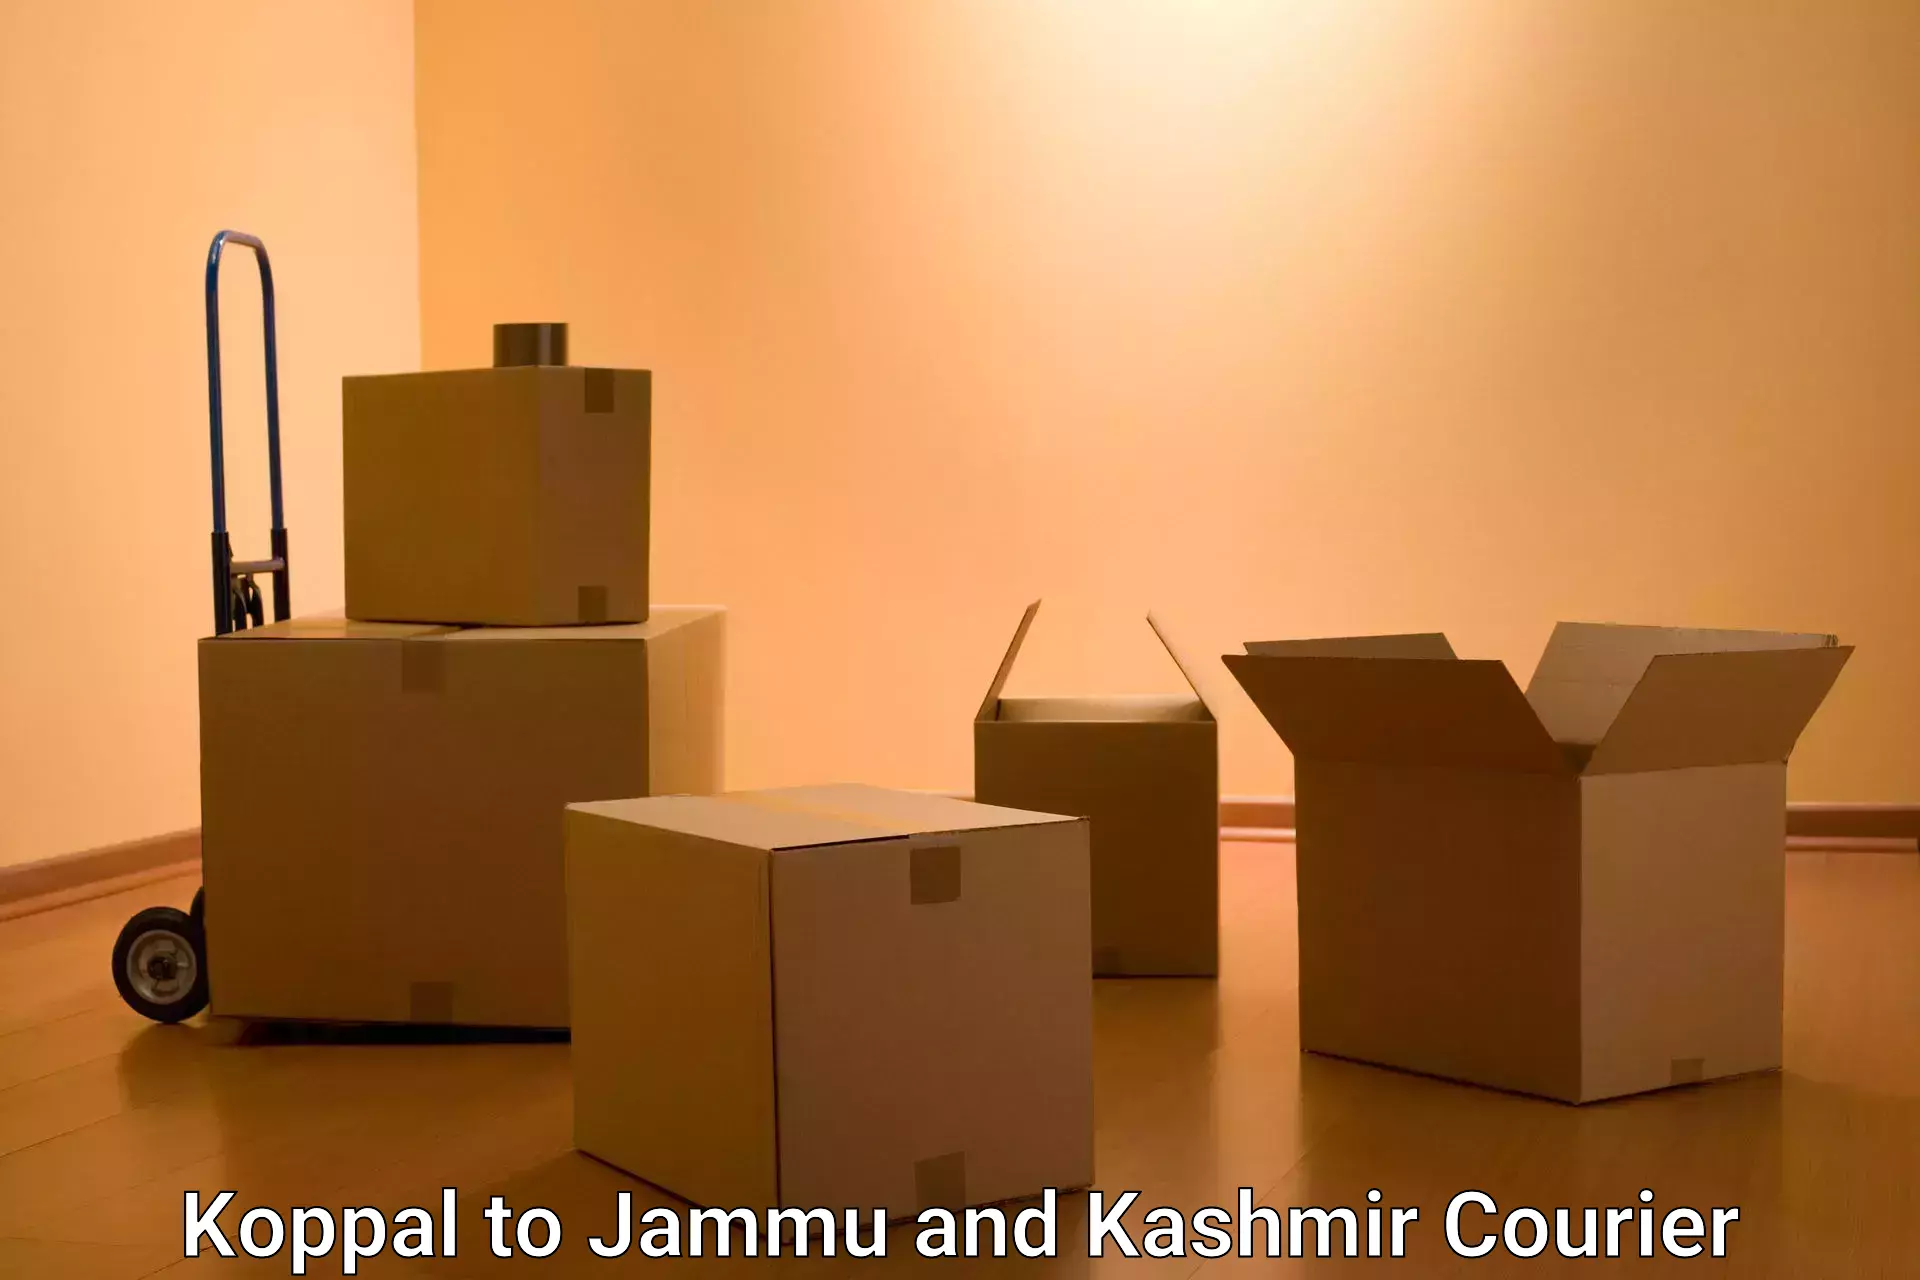 Professional courier handling Koppal to Jammu